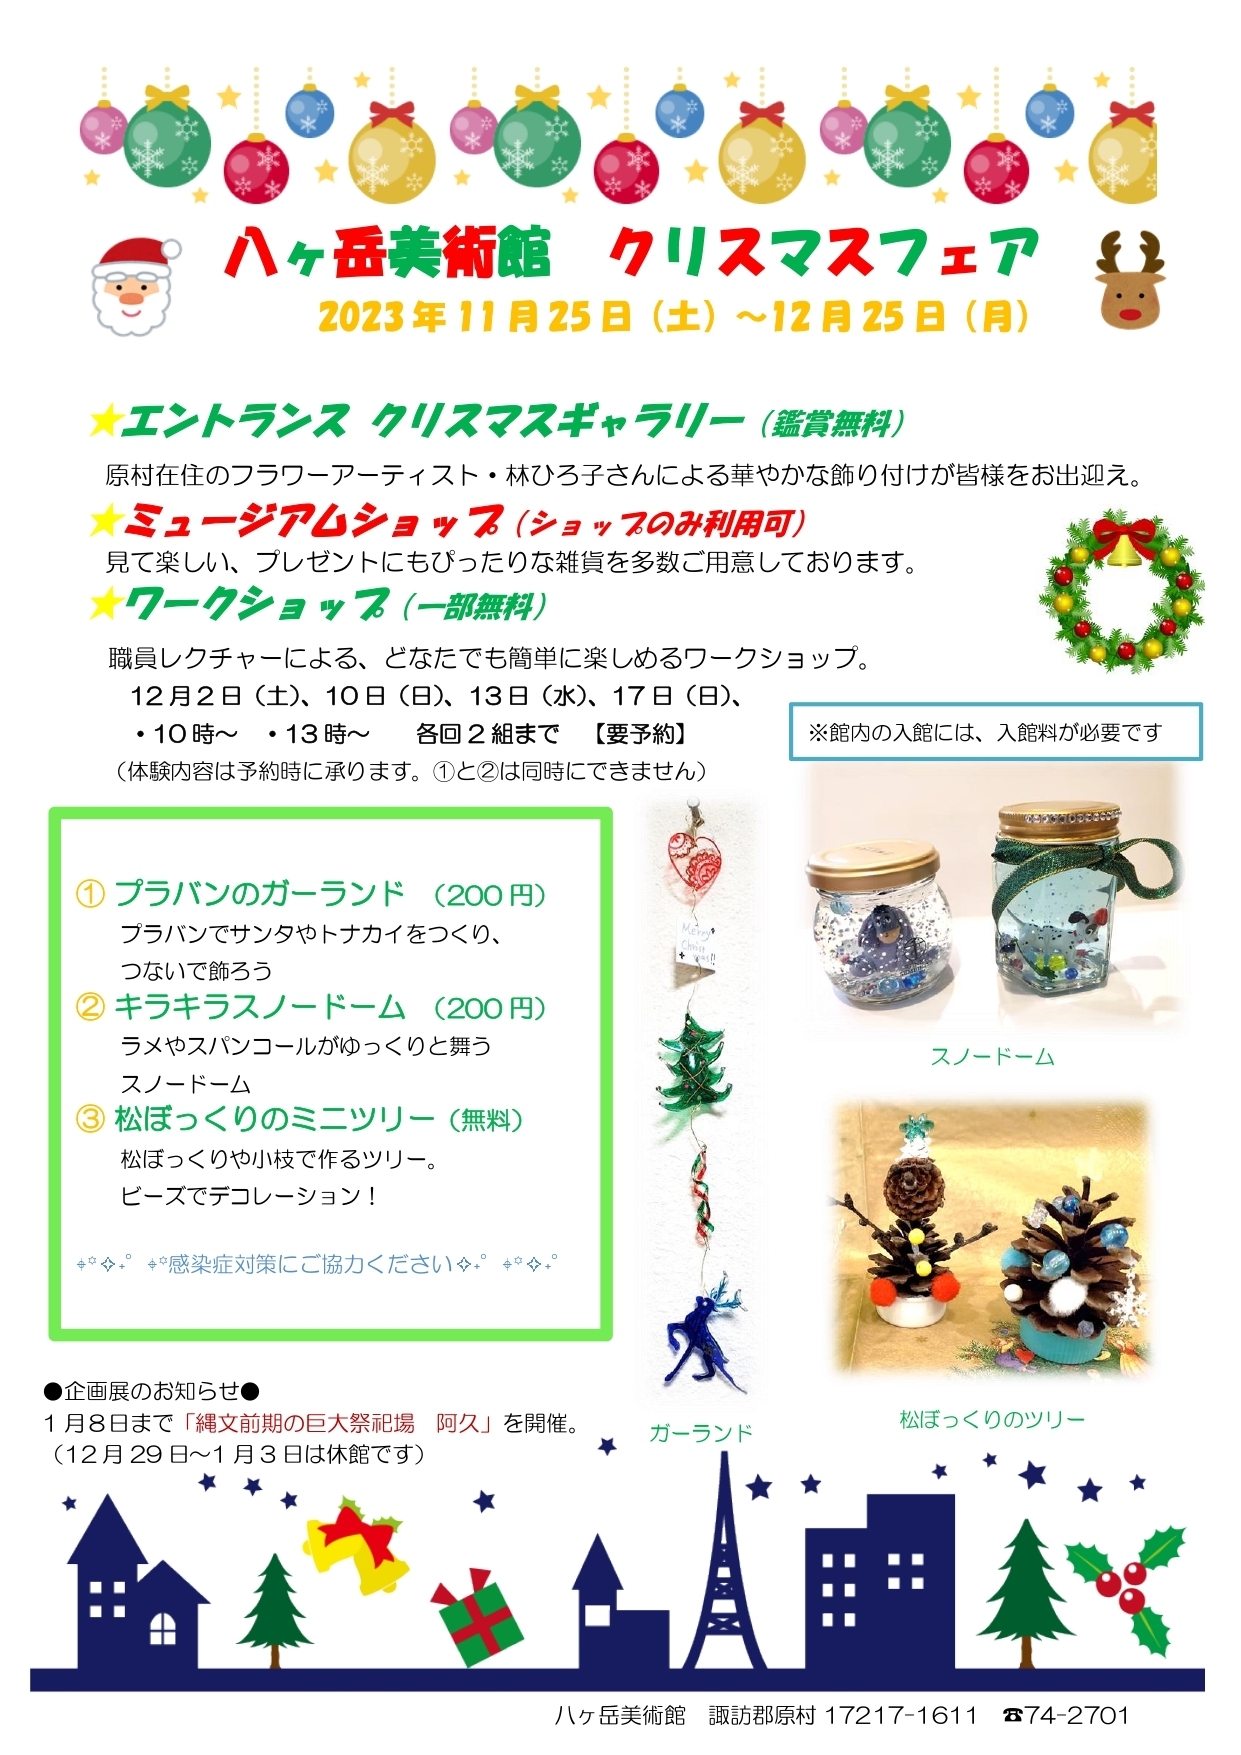 http://www.alpico.co.jp/shikinomori/news/images/cristmasfair2023.jpg